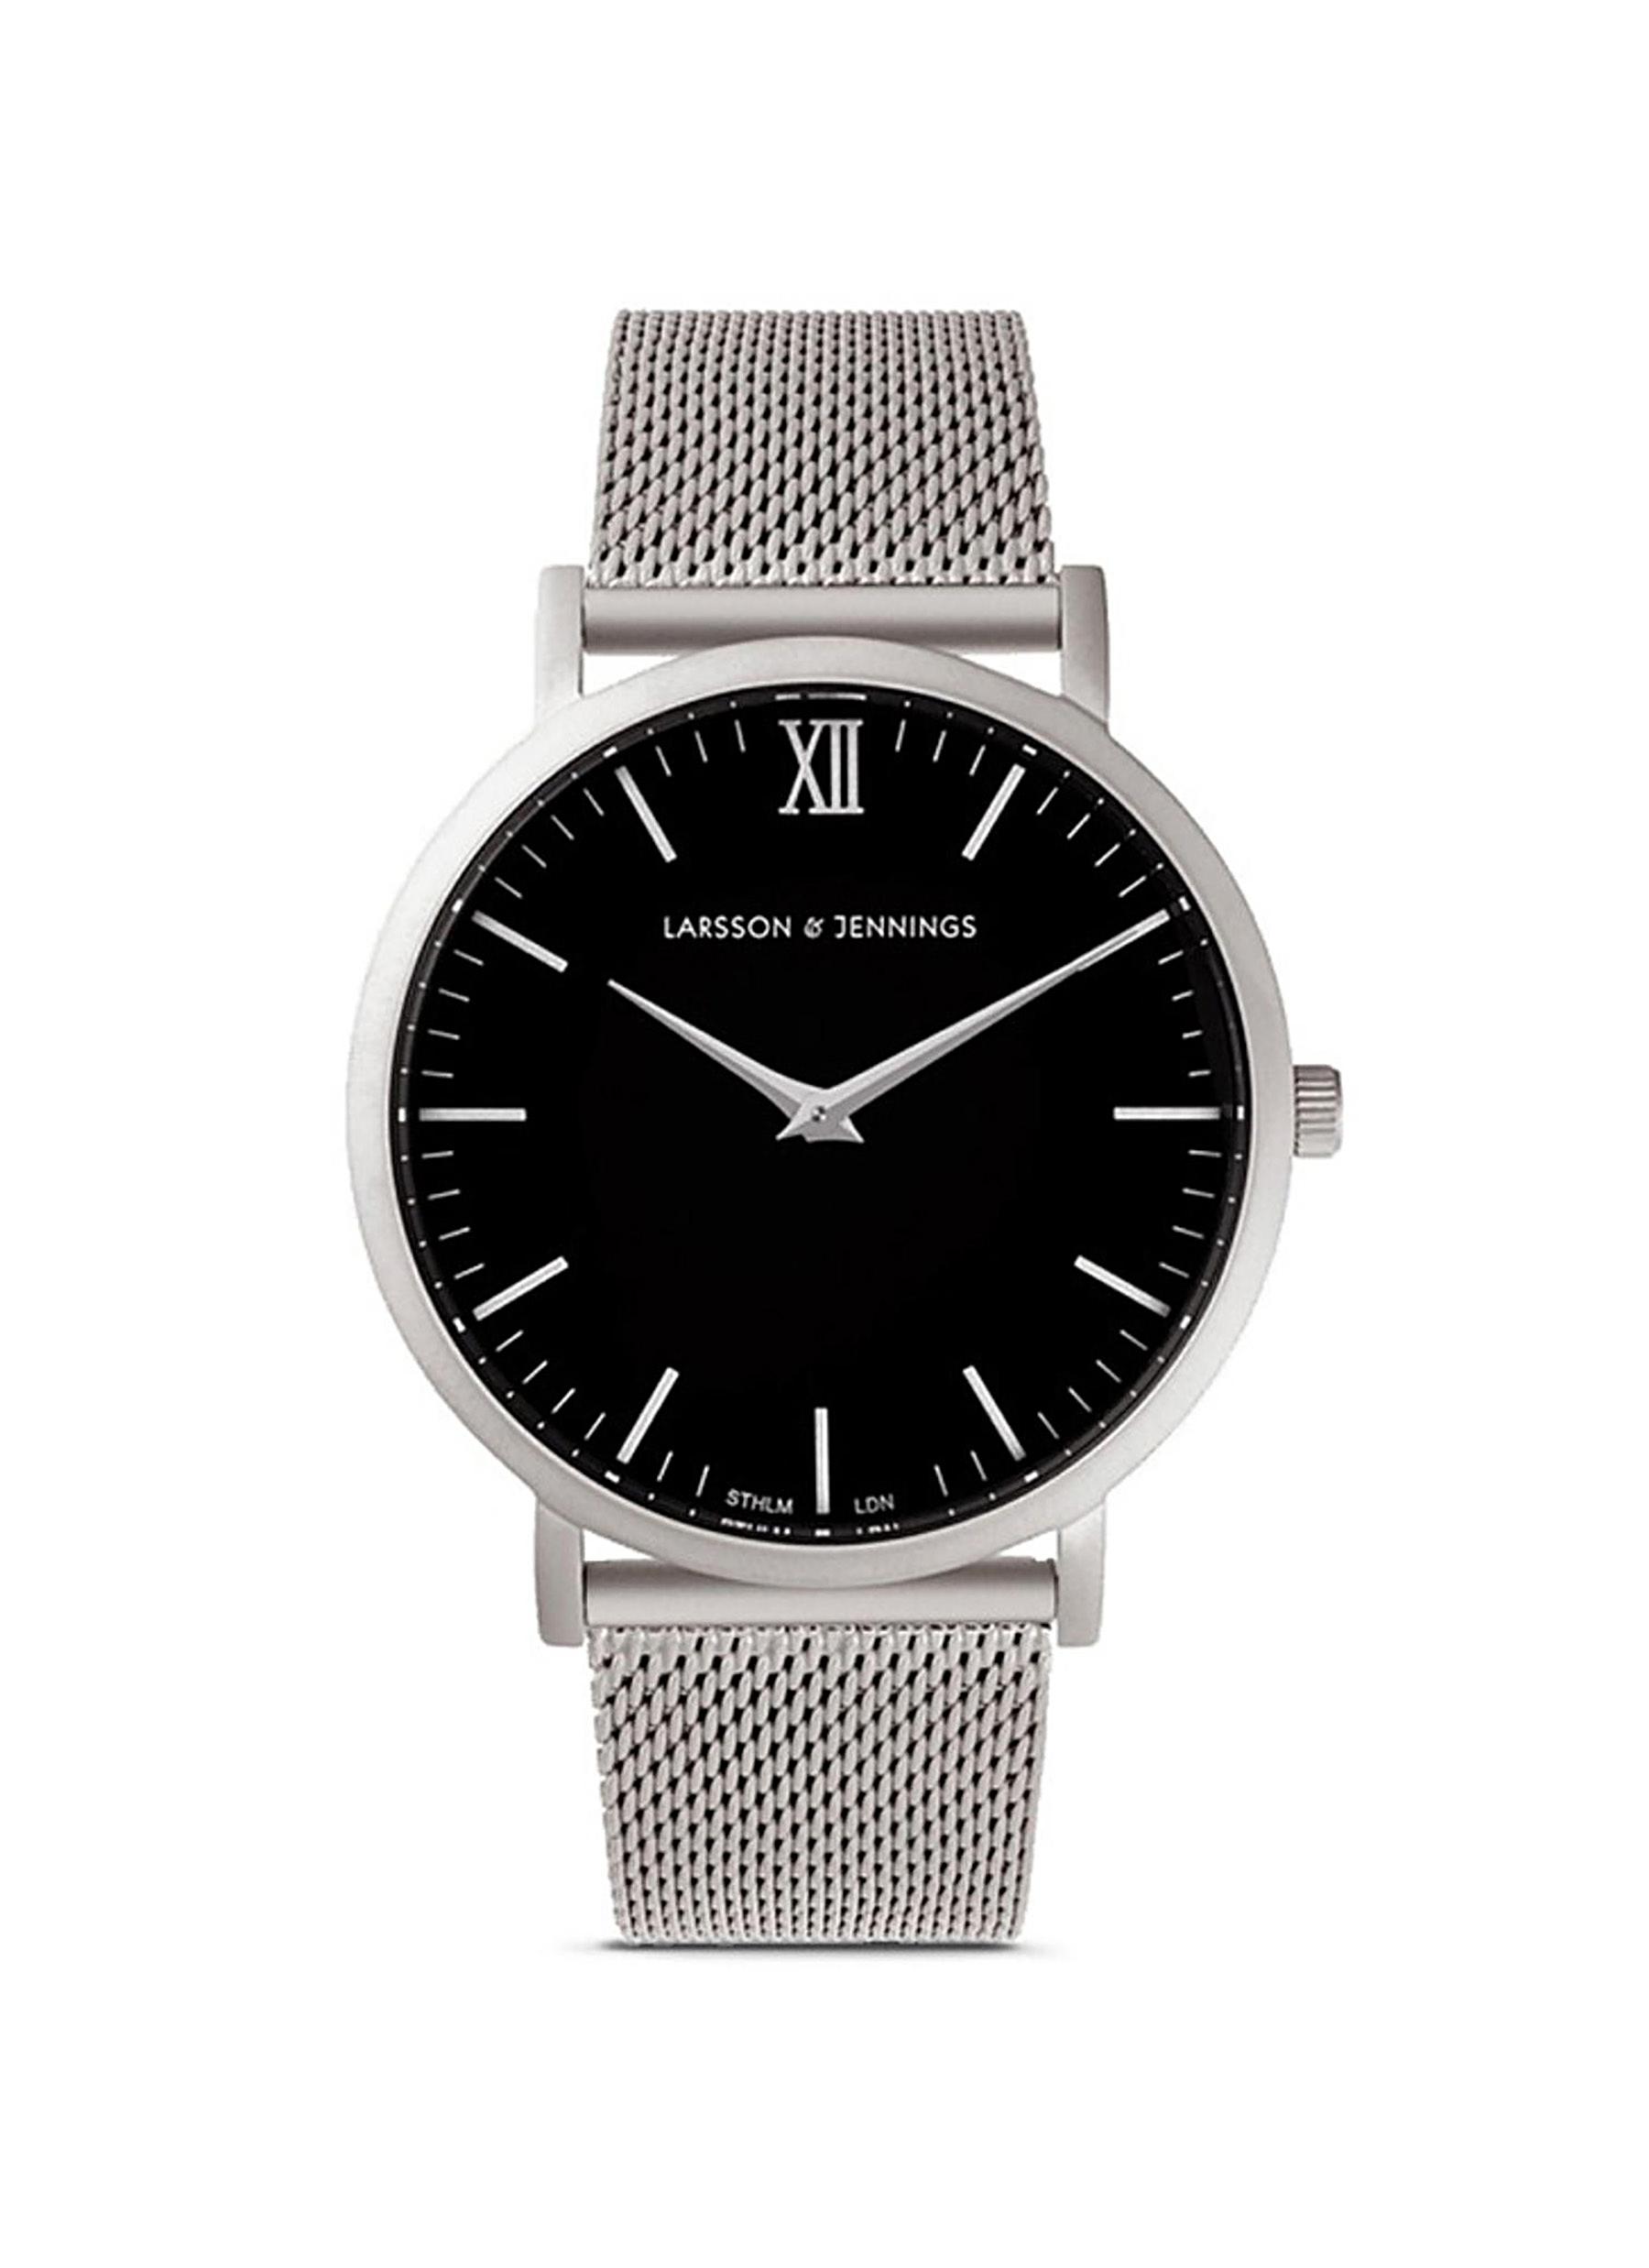 Larsson & Jennings 'Lugano 40mm' watch